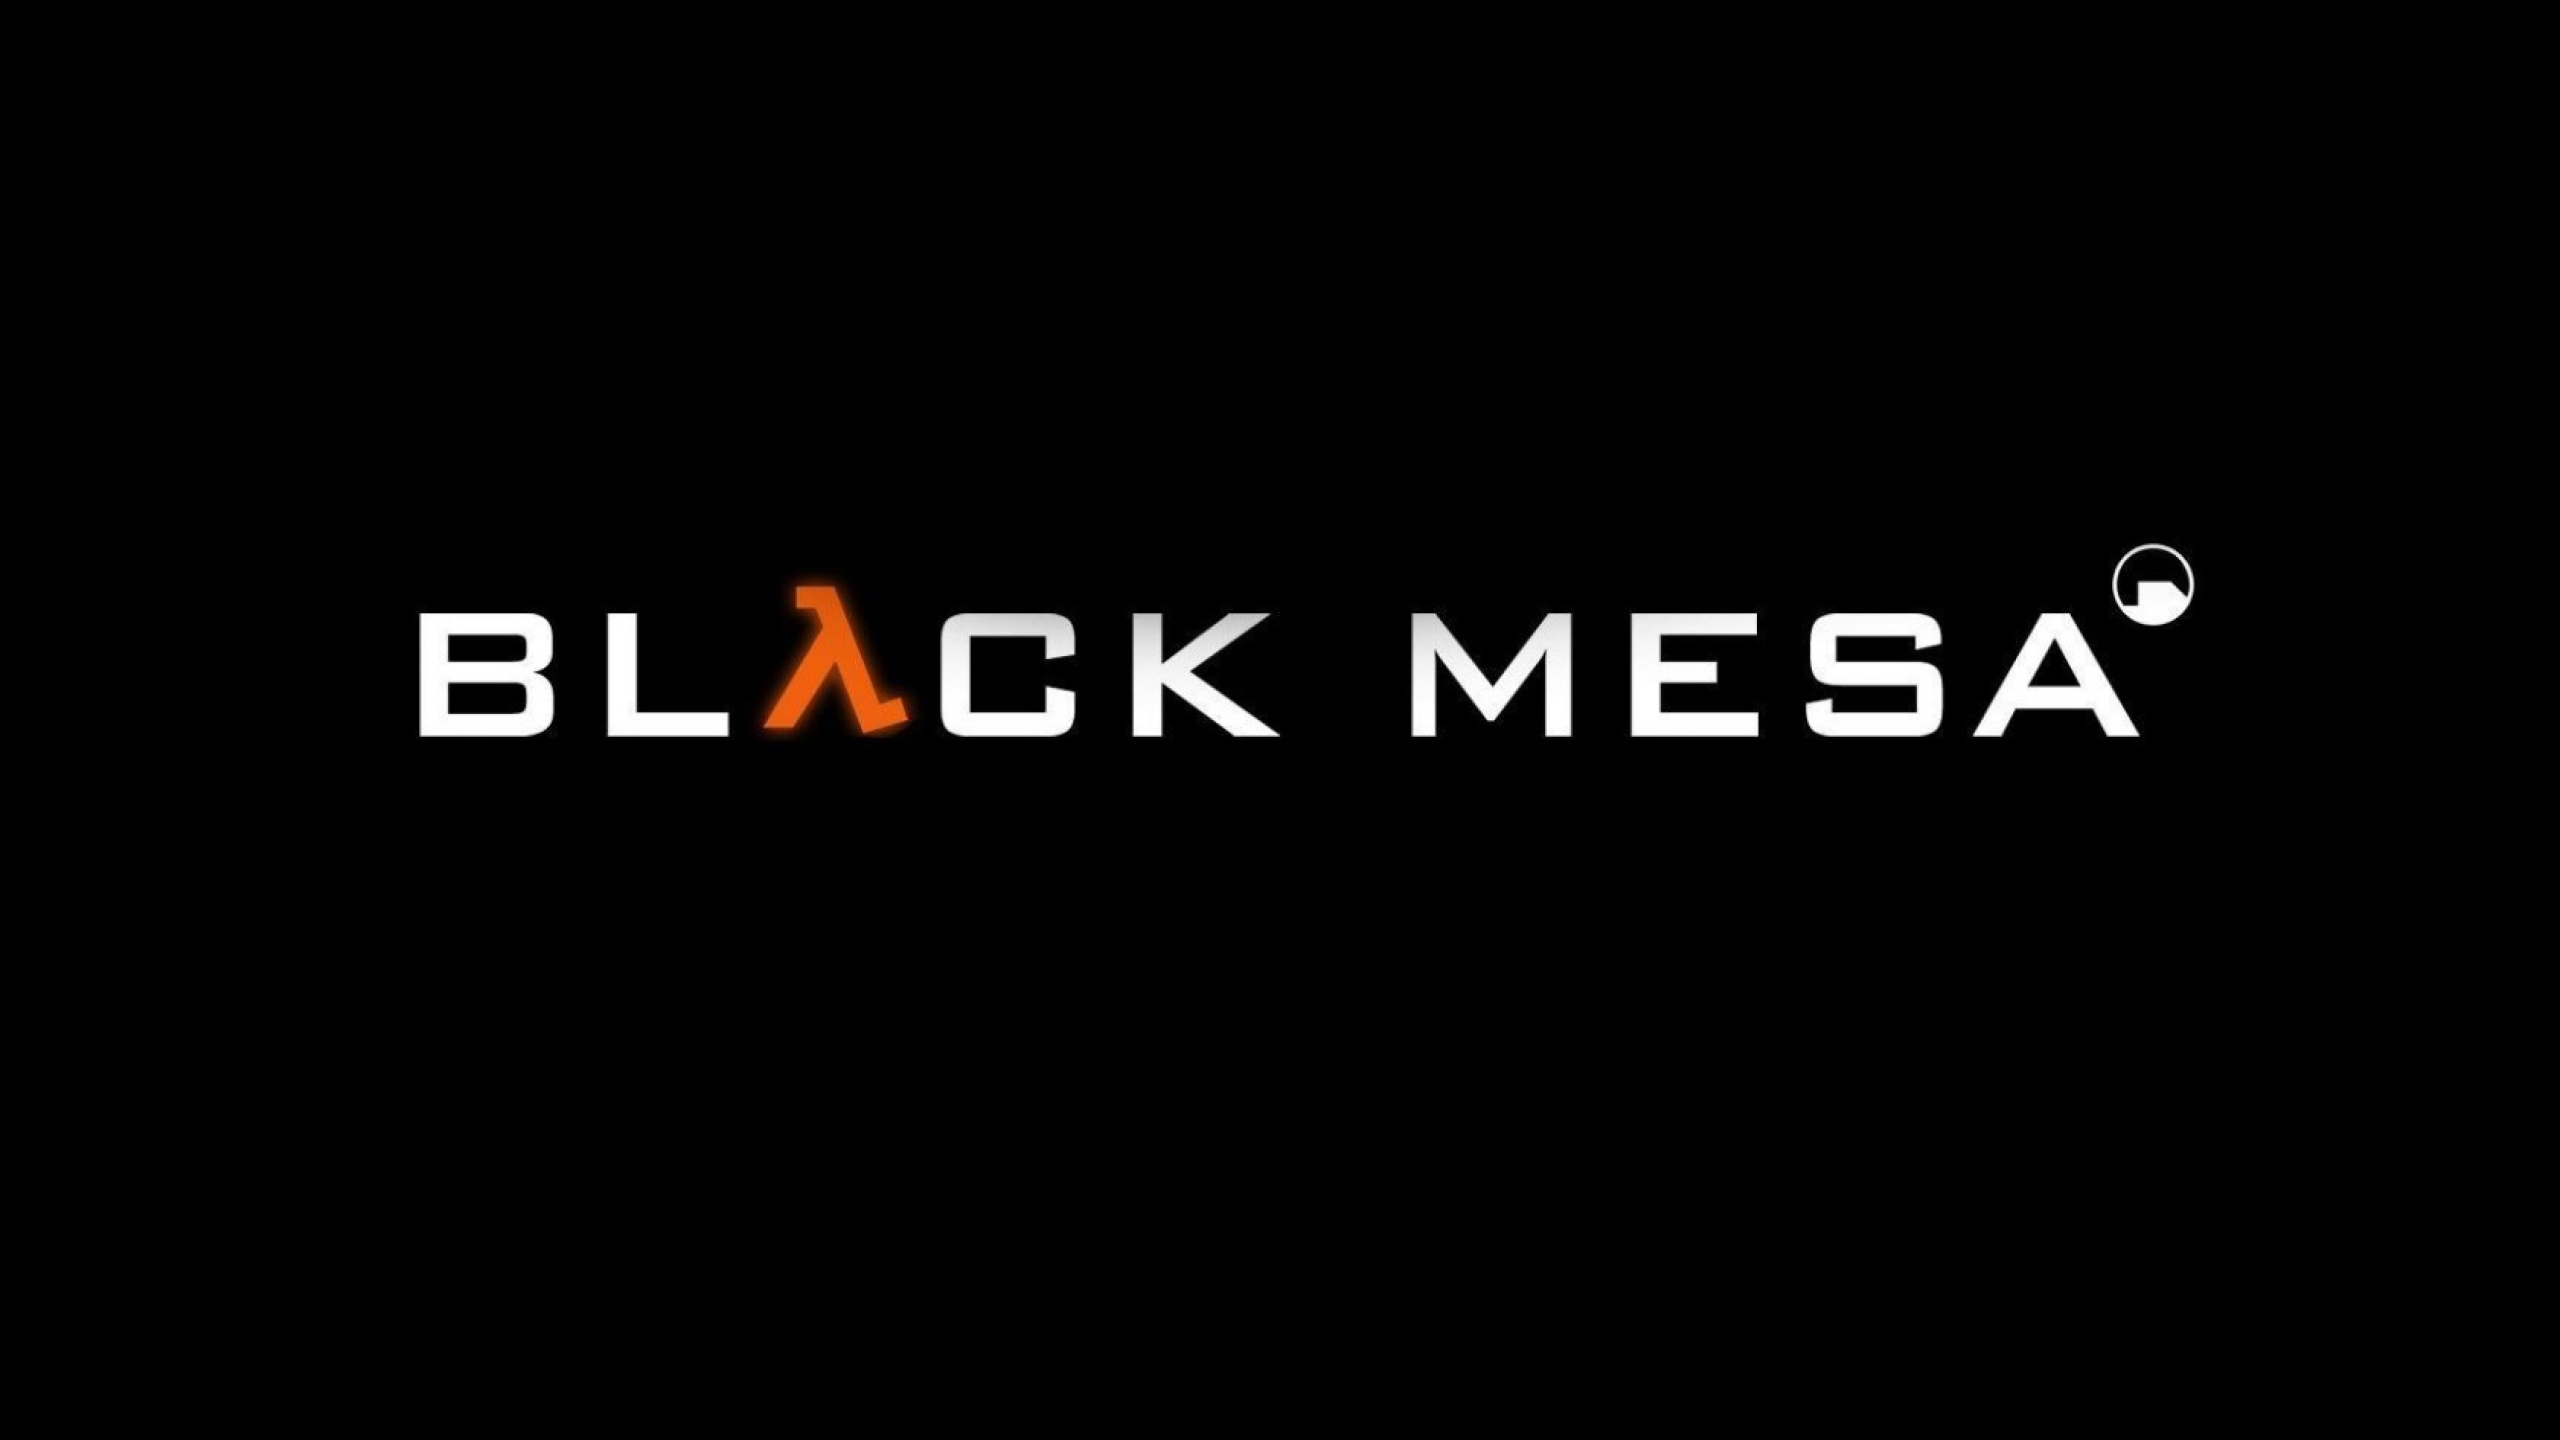 2560x1440 Black Mesa Black Mesa Modification Team Shooter 1440p Resolution Wallpaper Hd Games 4k Wallpapers Images Photos And Background - roblox black mesa